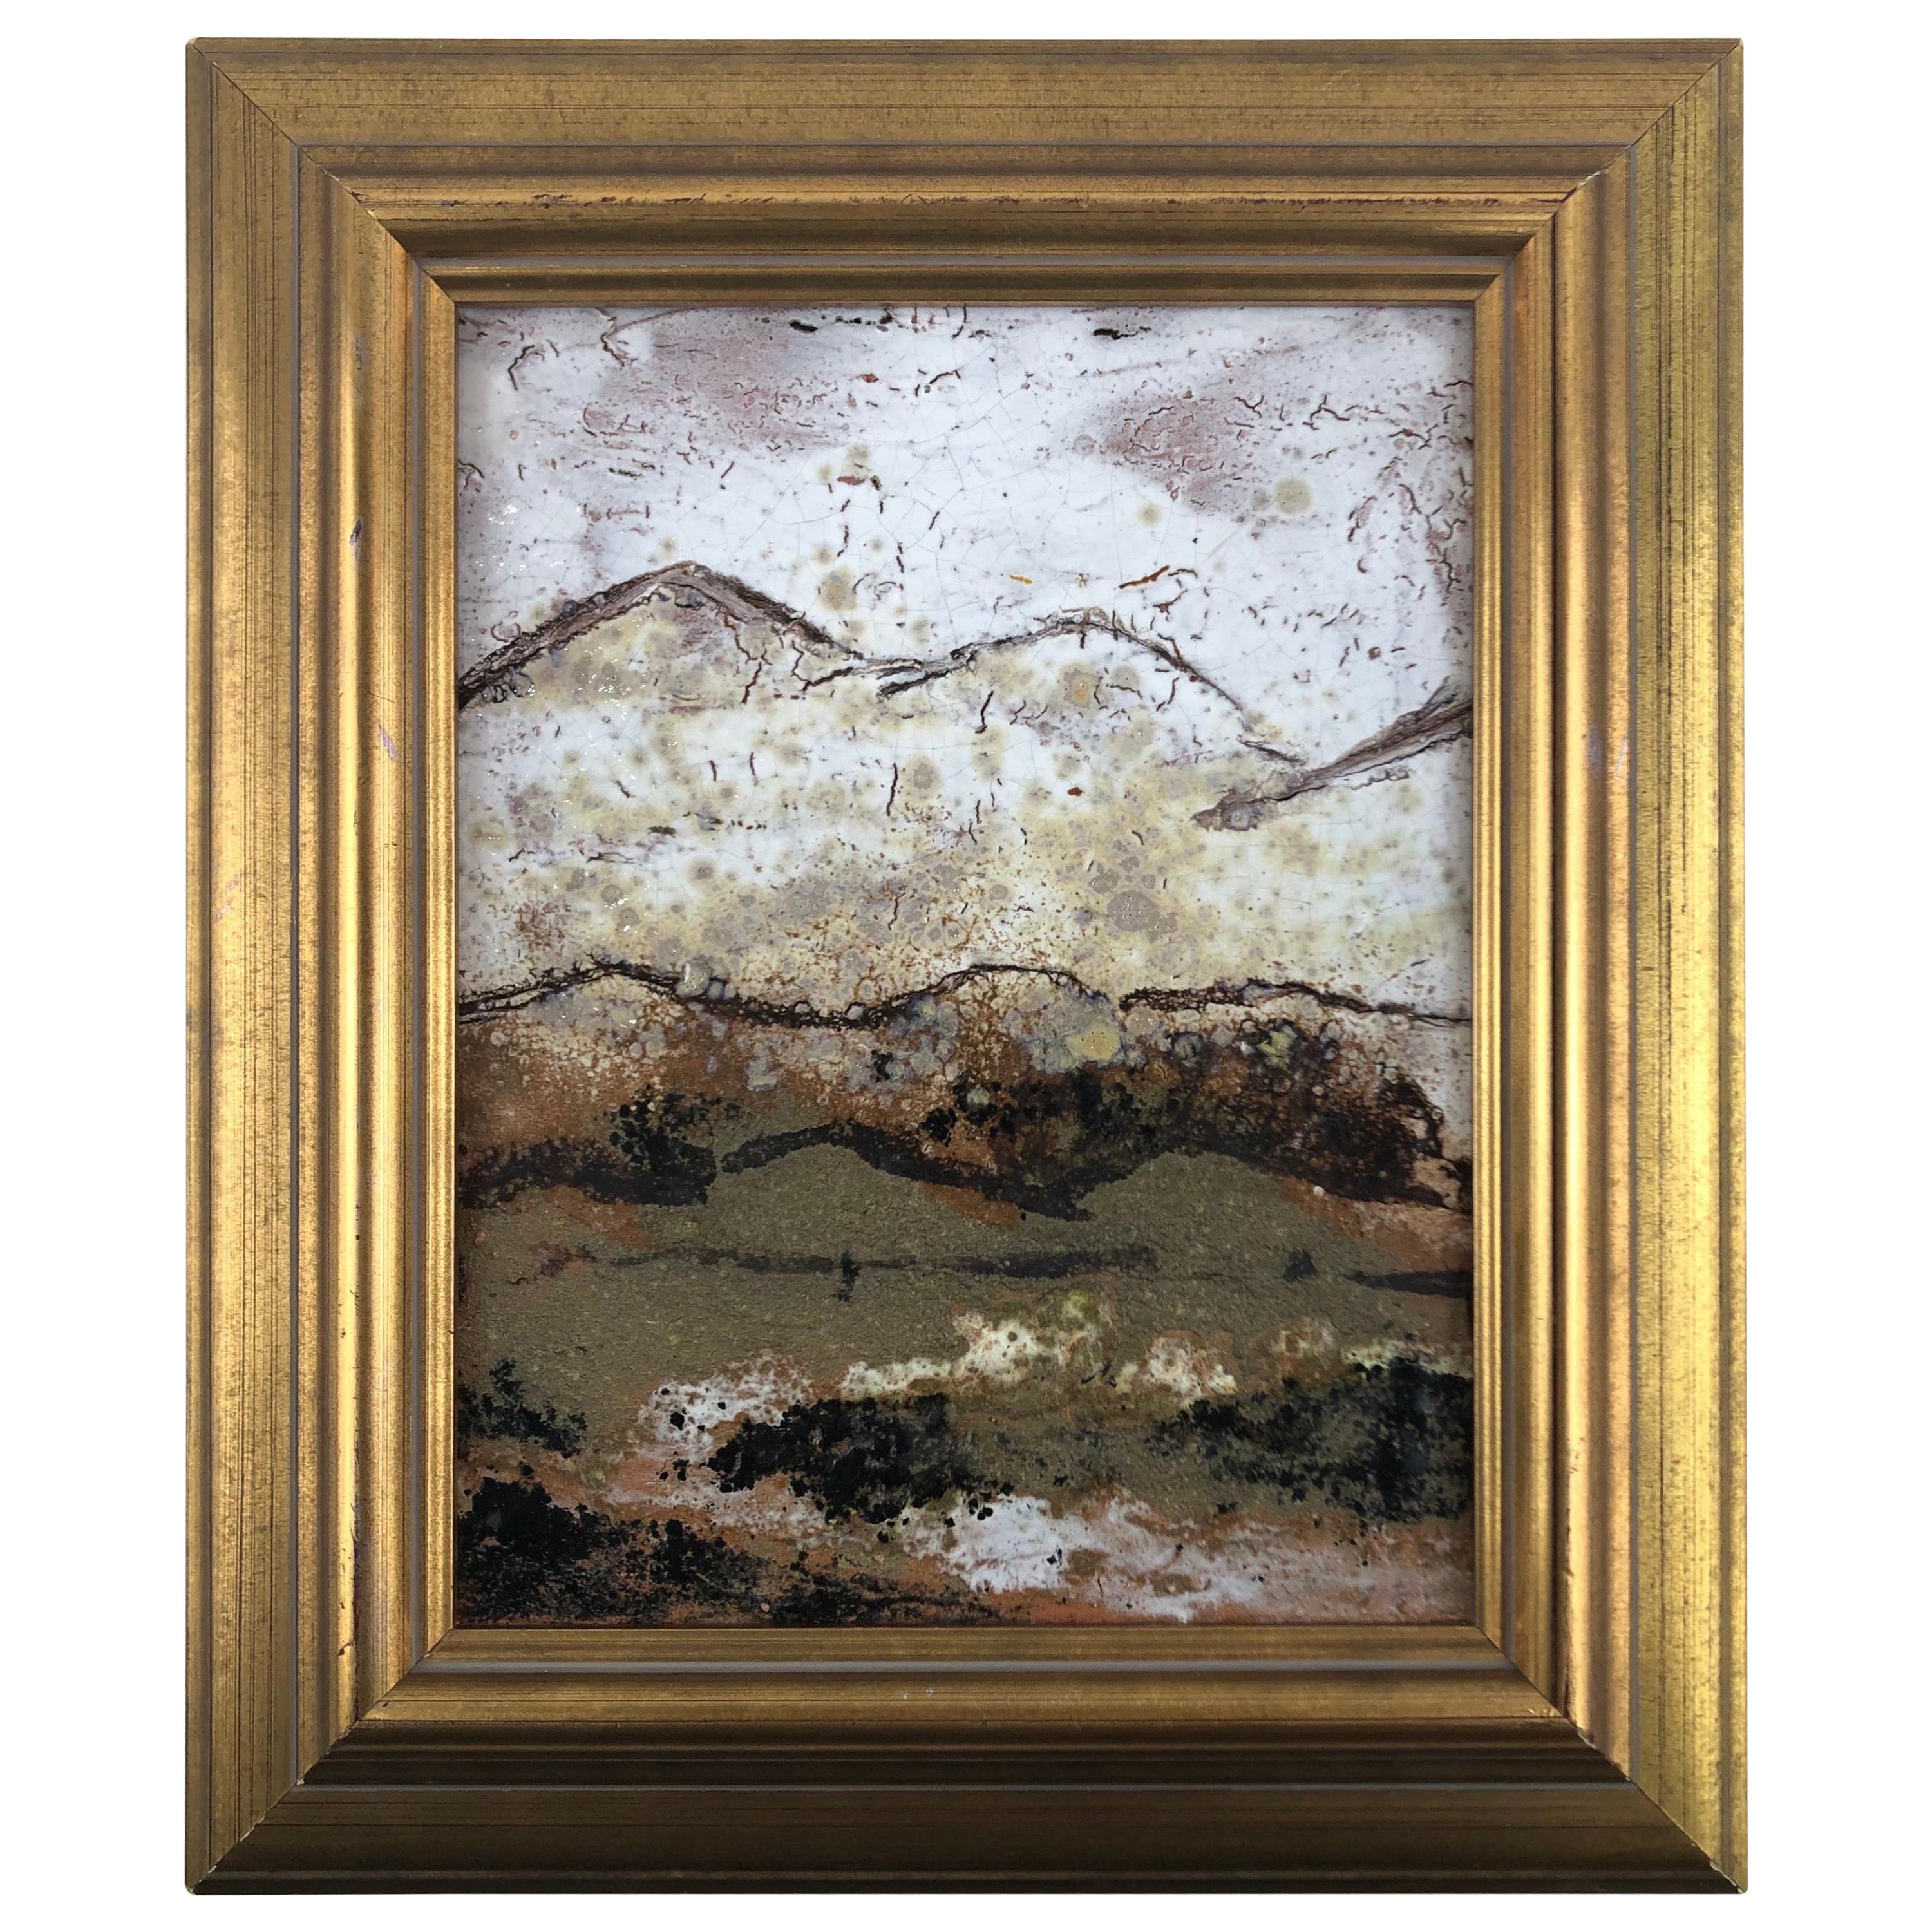 Framed Ceramic Tile Scenic Landscape Art For Sale